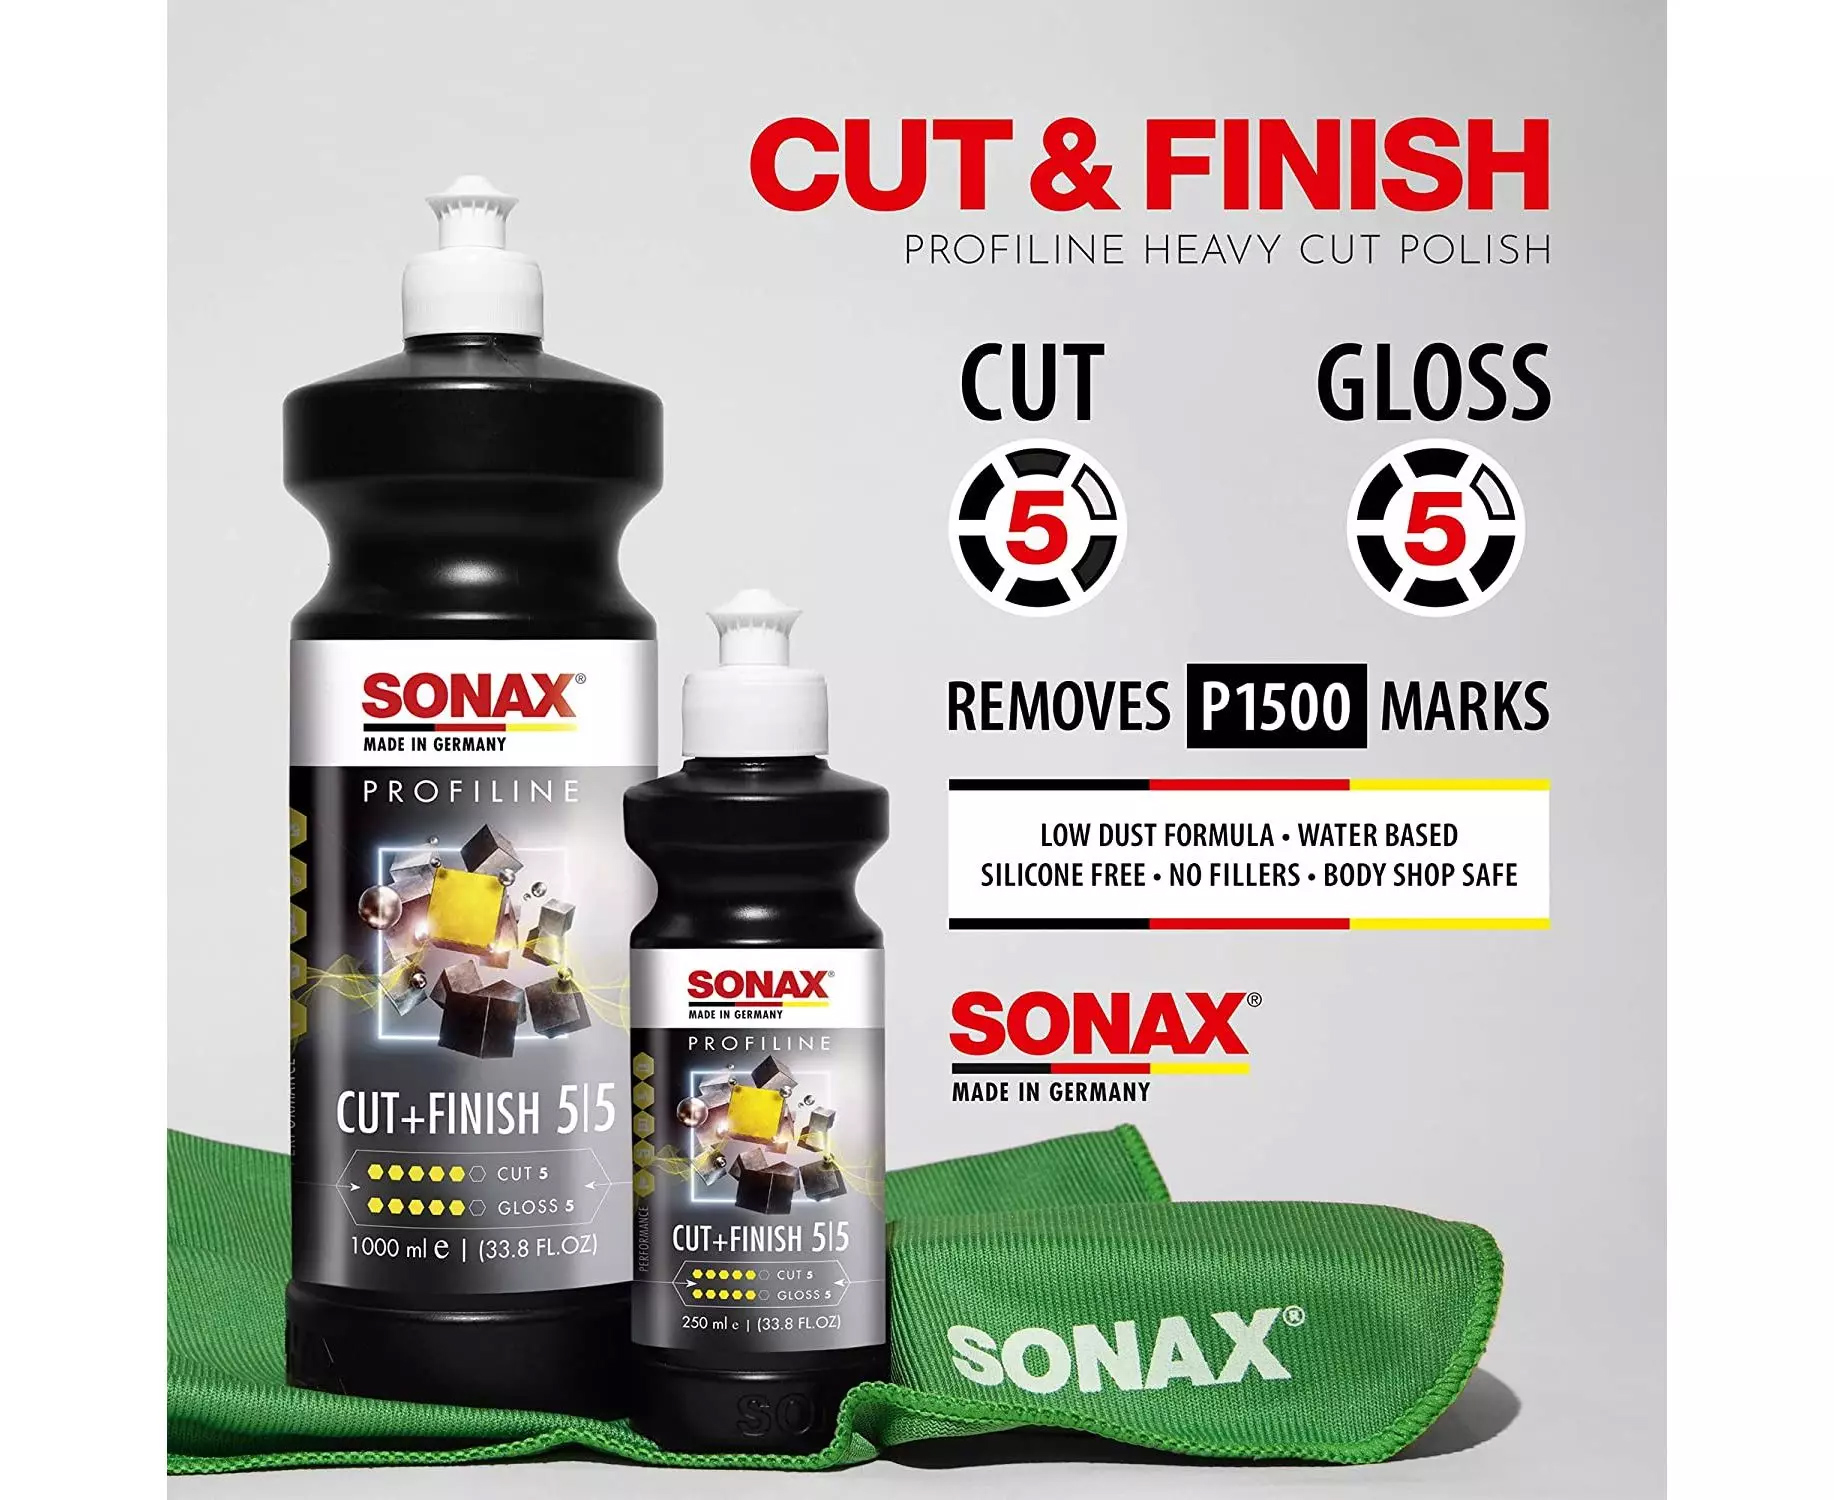 SONAX Profiline Abrasive Glass